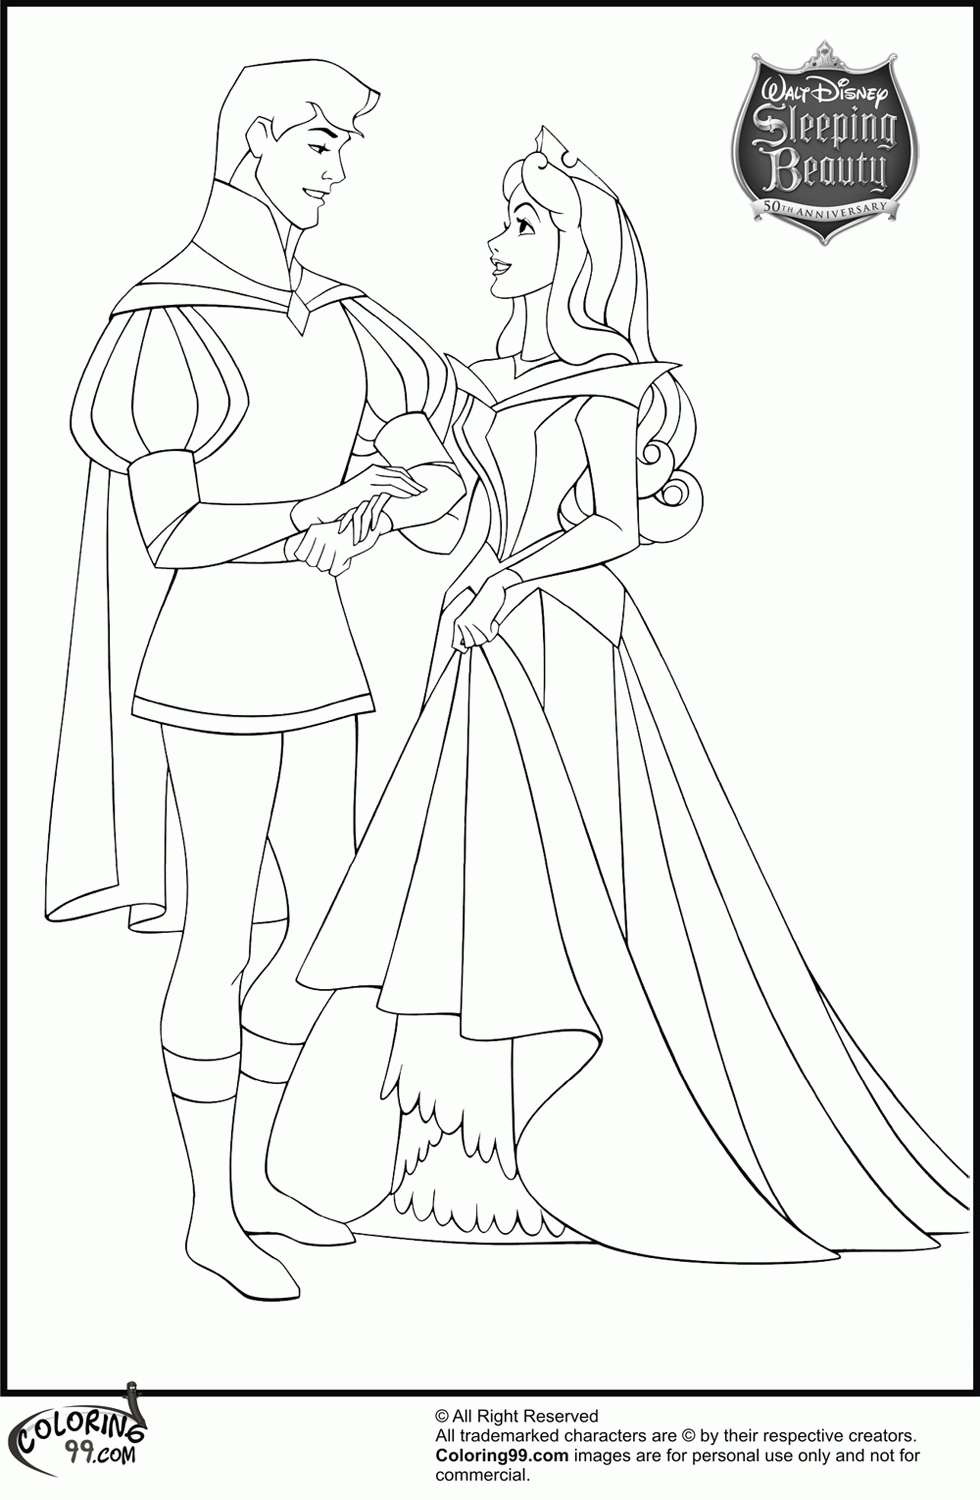 prince-and-princess-coloring-page-0044-q1